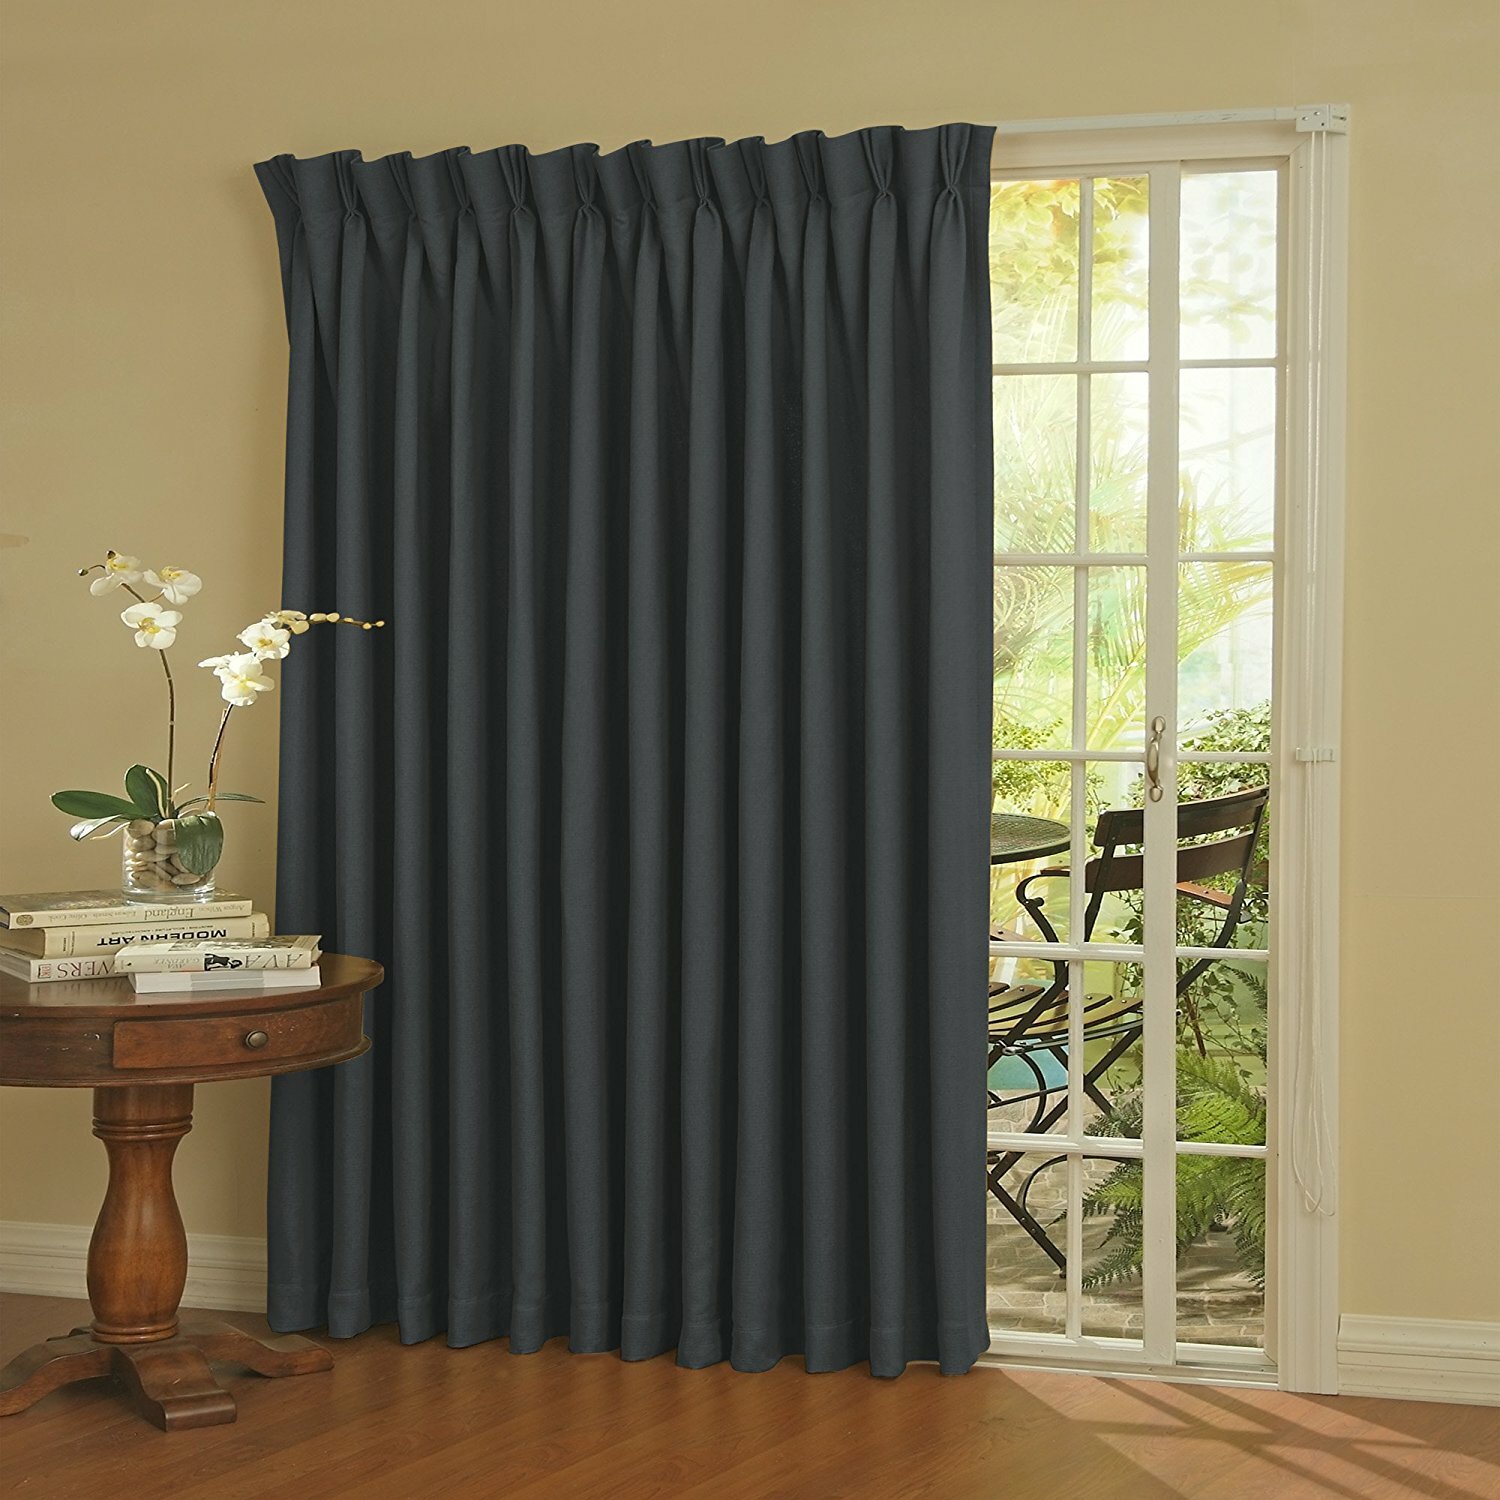 Curtains That Block Light | Blackout Draperies | Cheap Blackout Curtains